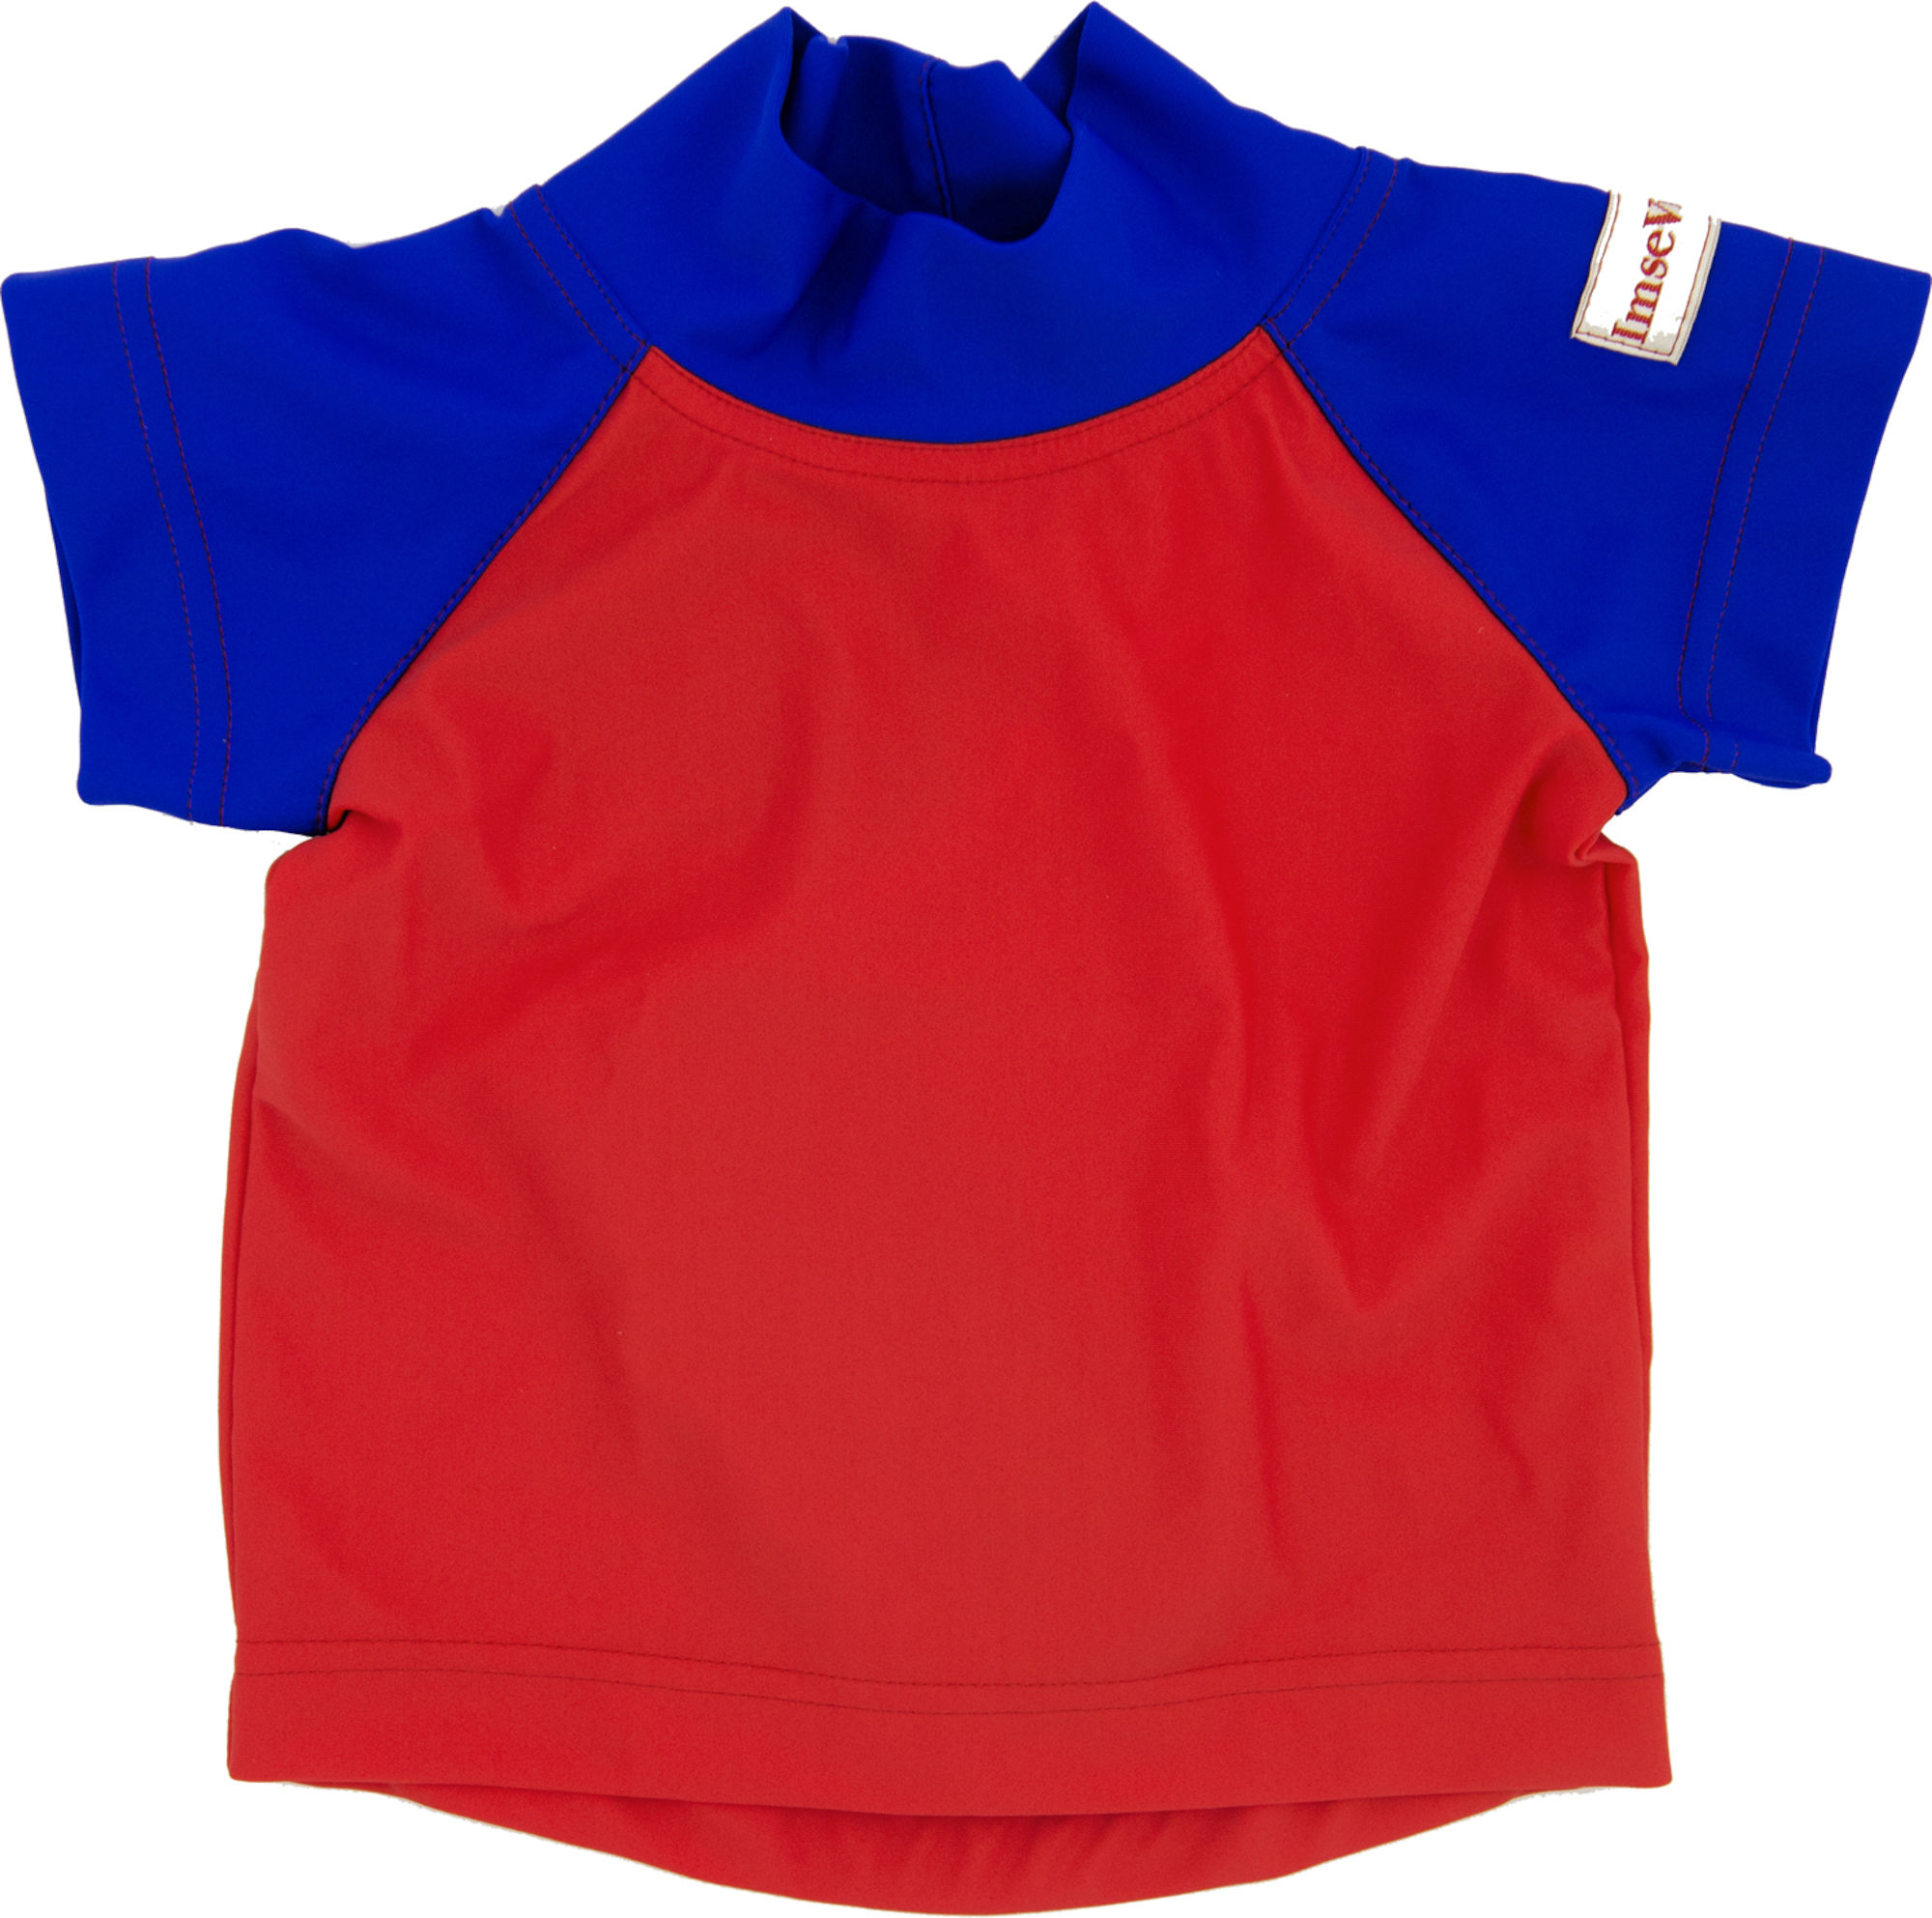 ImseVimse UV T-shirt Red/Blue 62-68